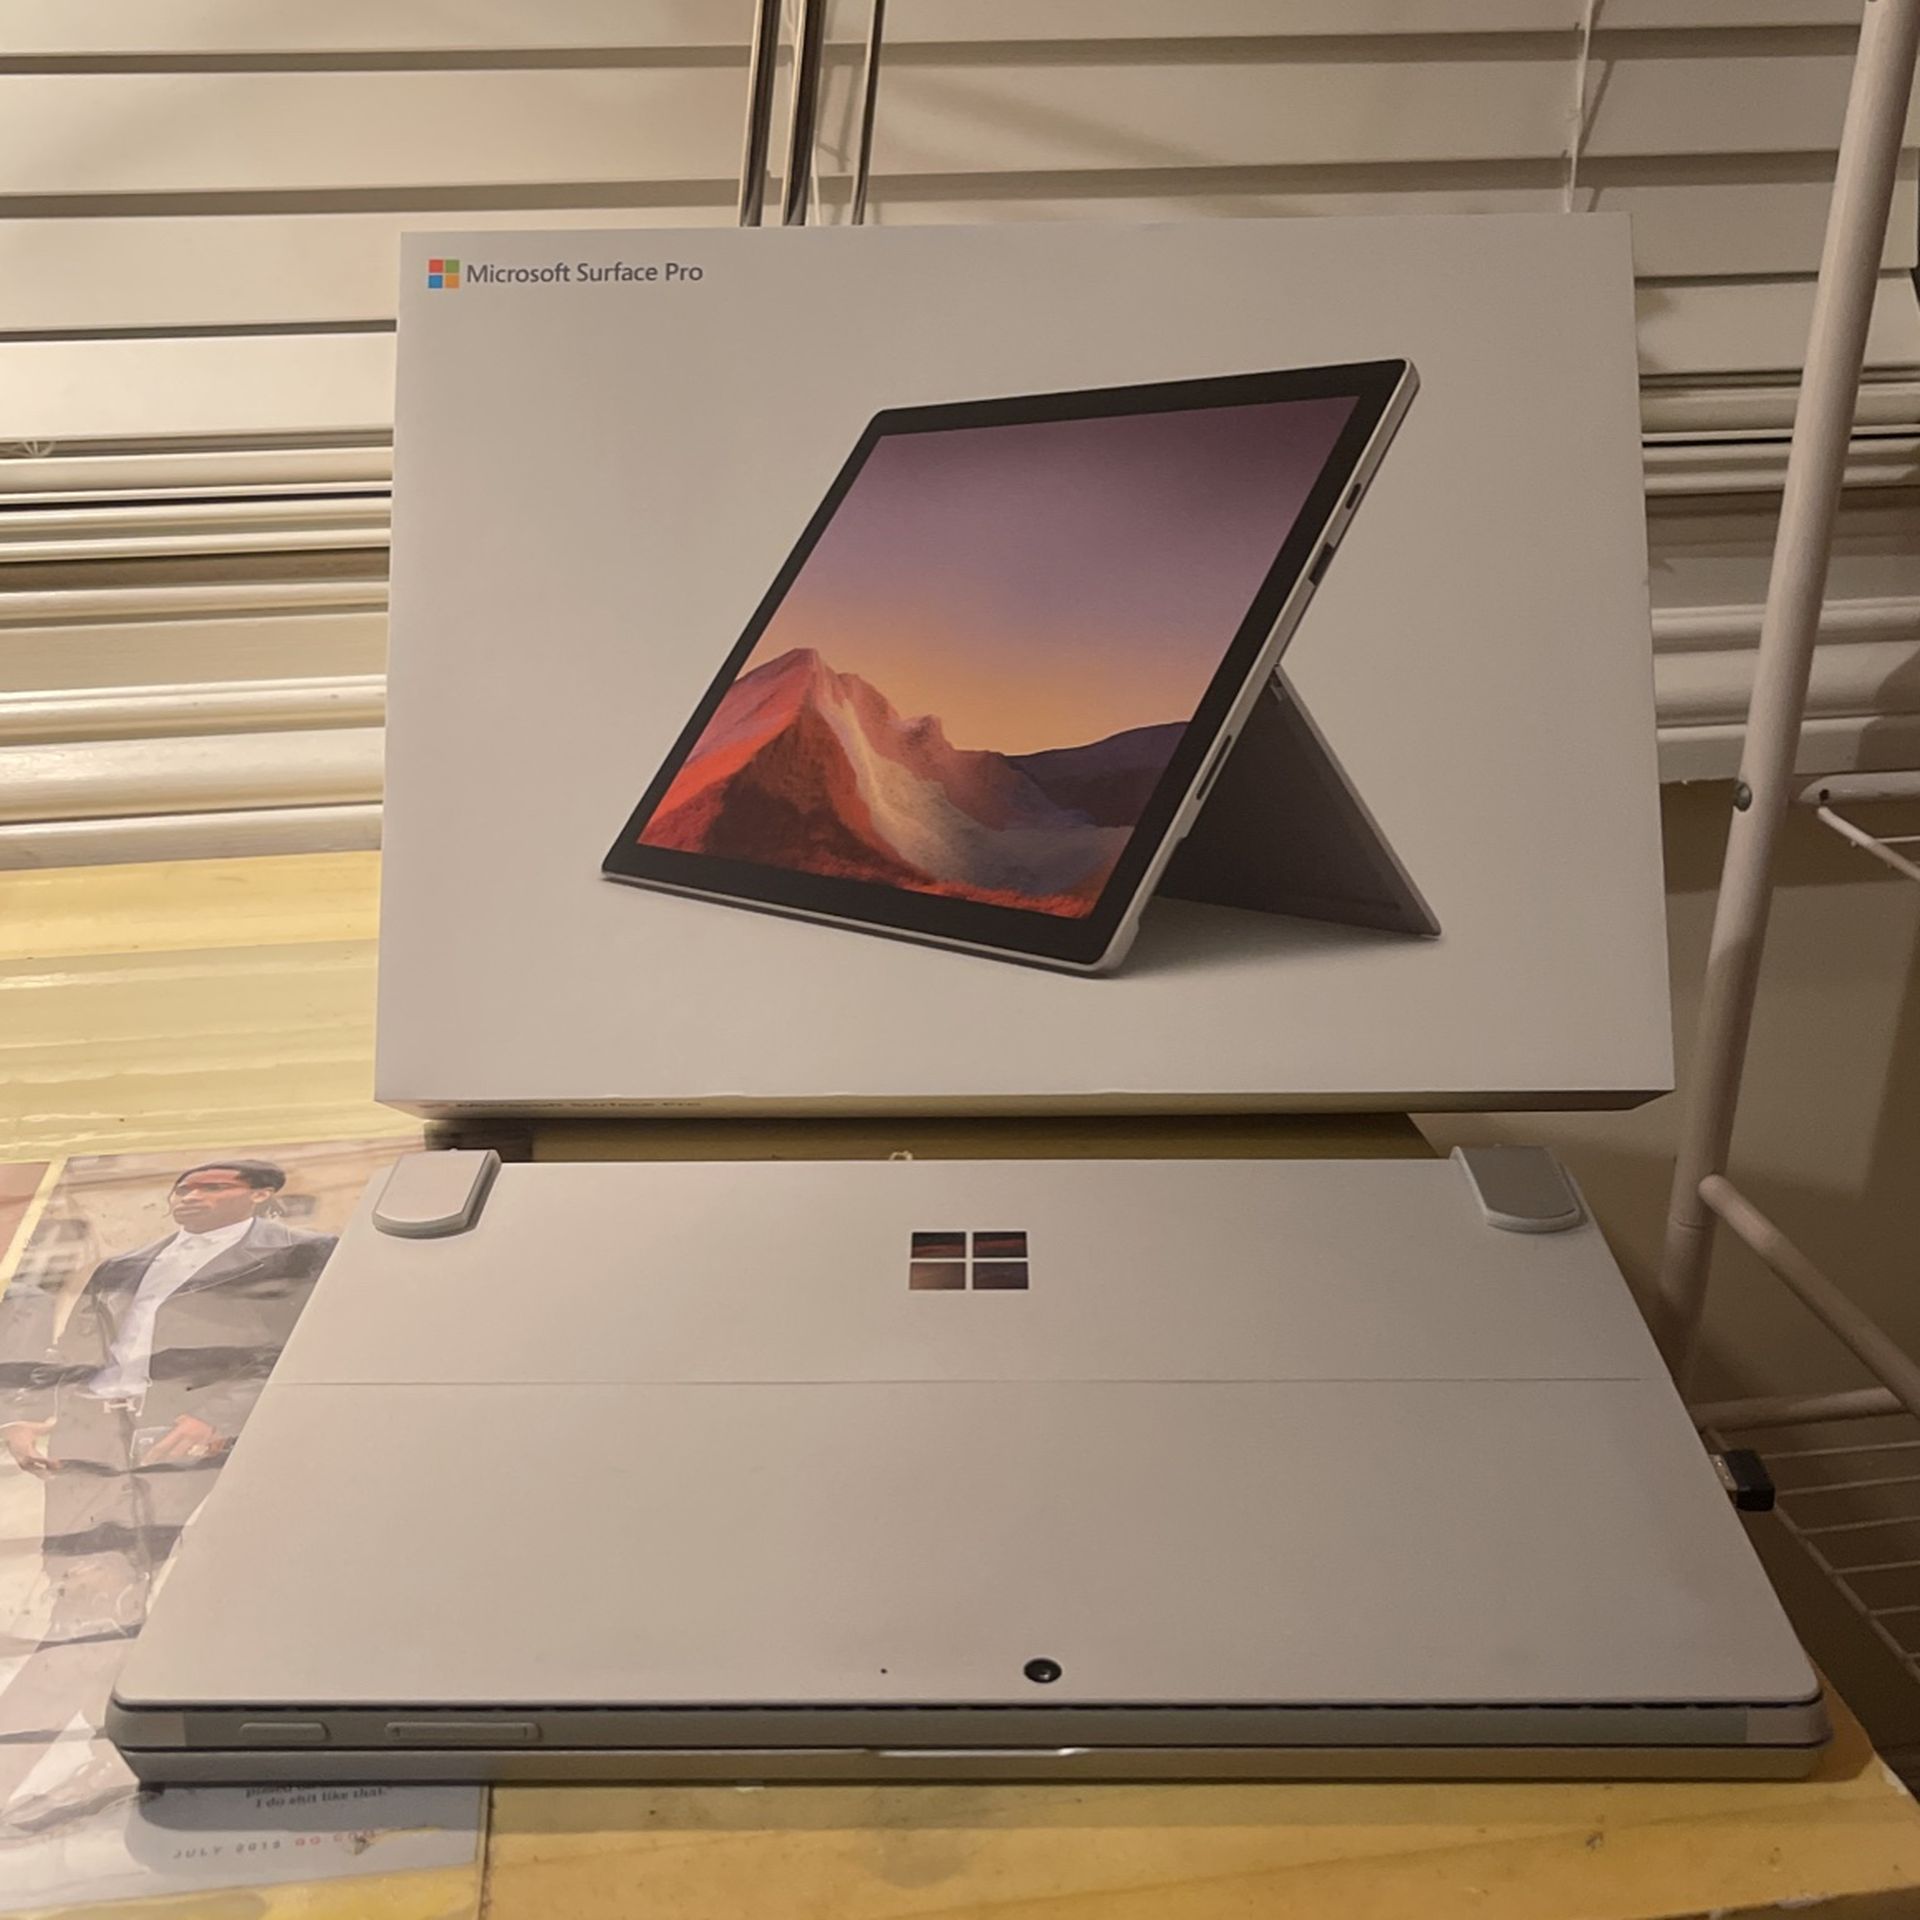 Microsoft Surface Pro 2020 model